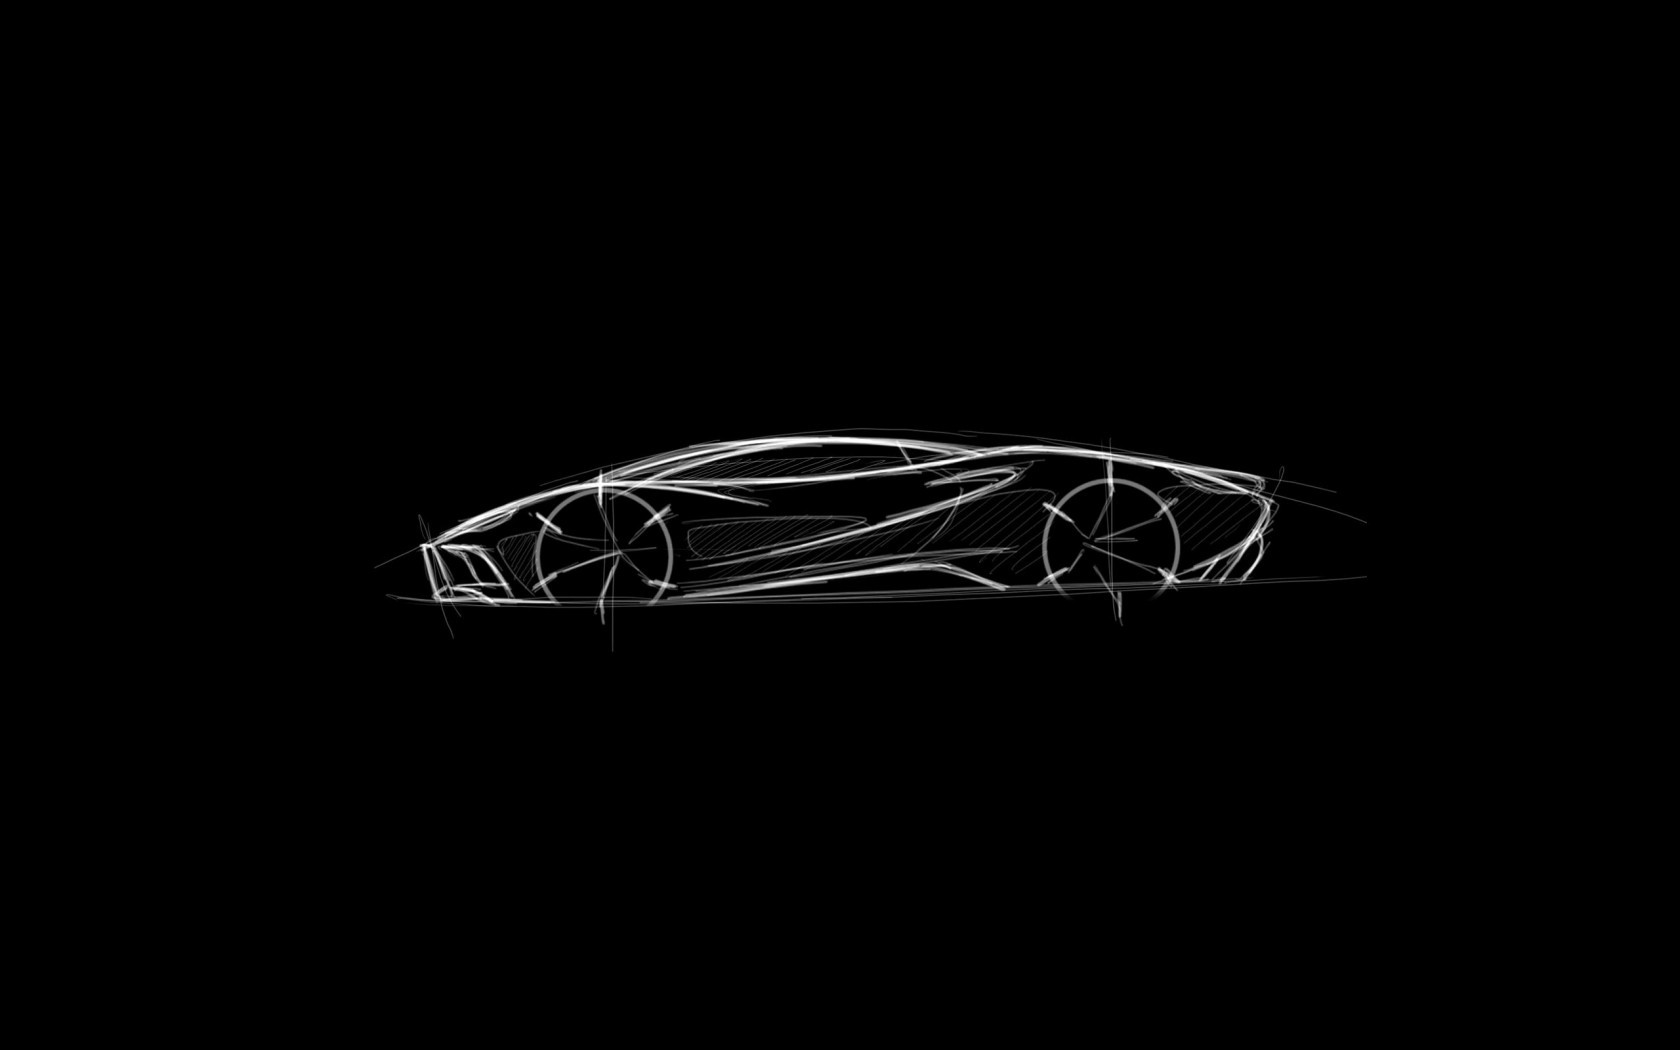 General 1680x1050 digital art minimalism black background sports car car drawing sketches modern white monochrome vehicle simple background